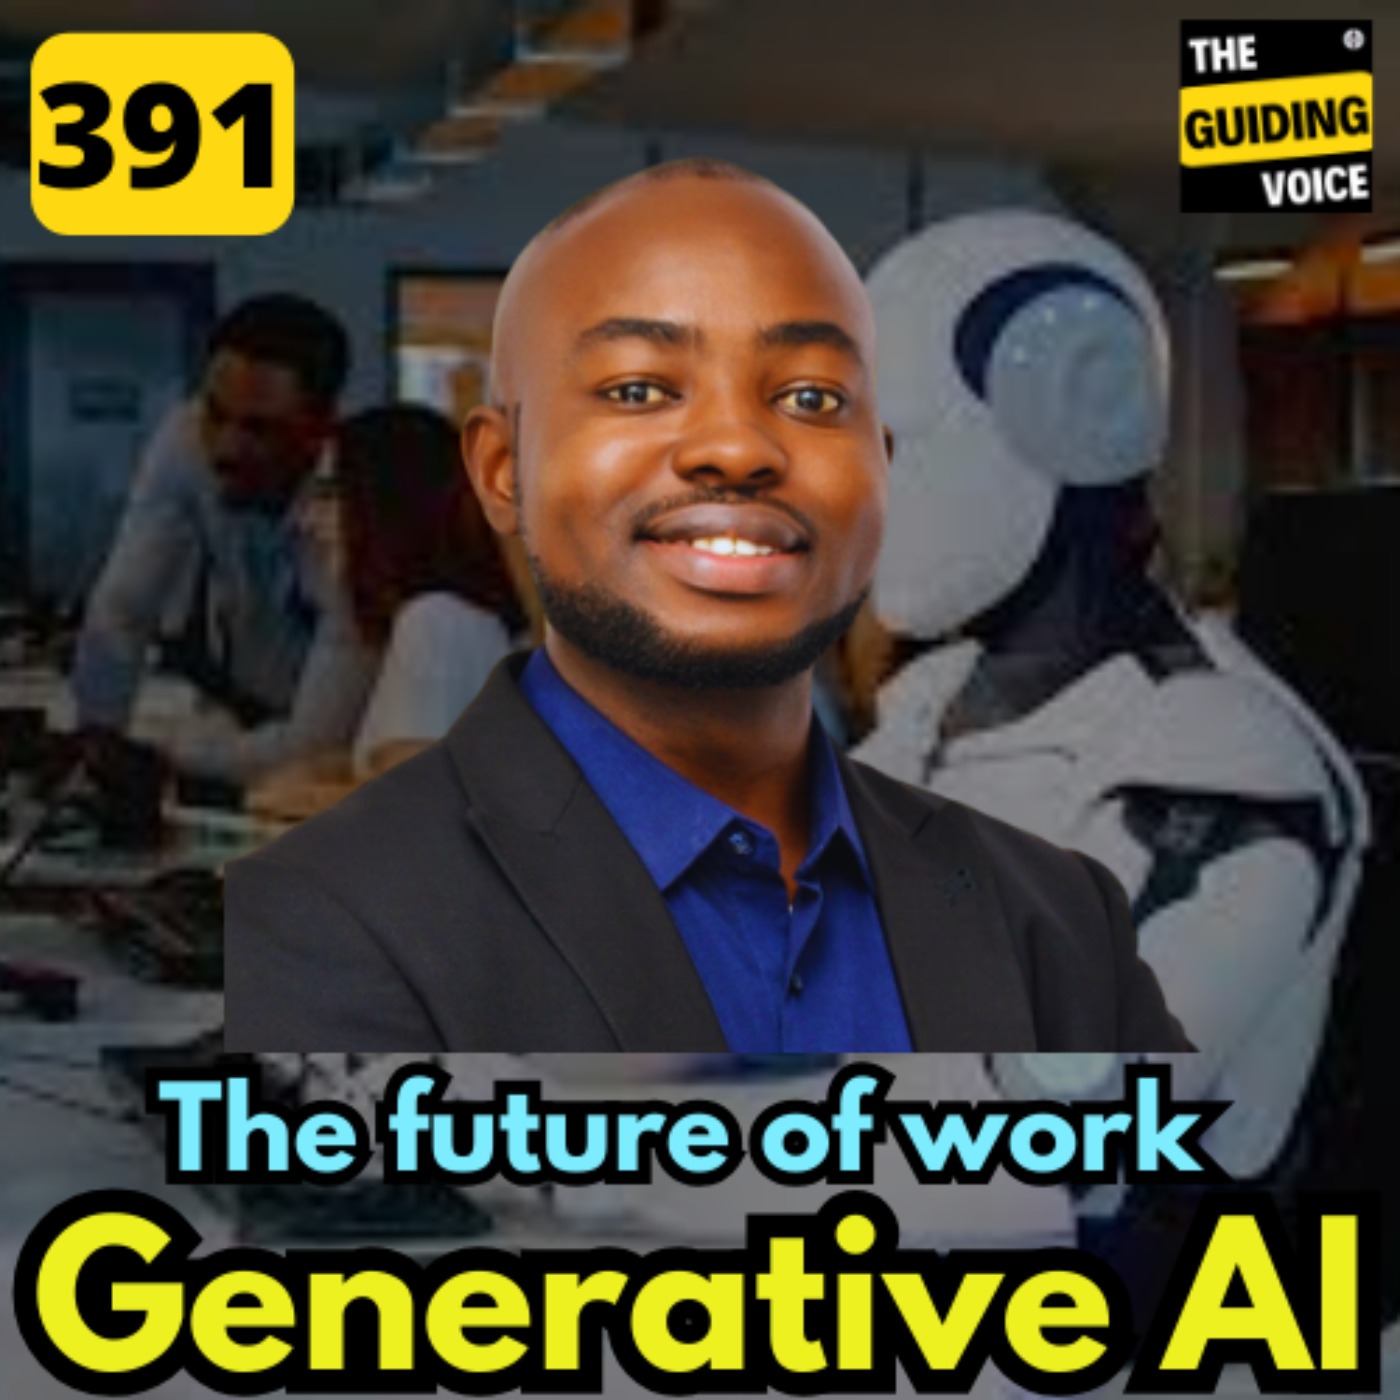 The future of work and Generative AI  | Orakwe John | #TGV391